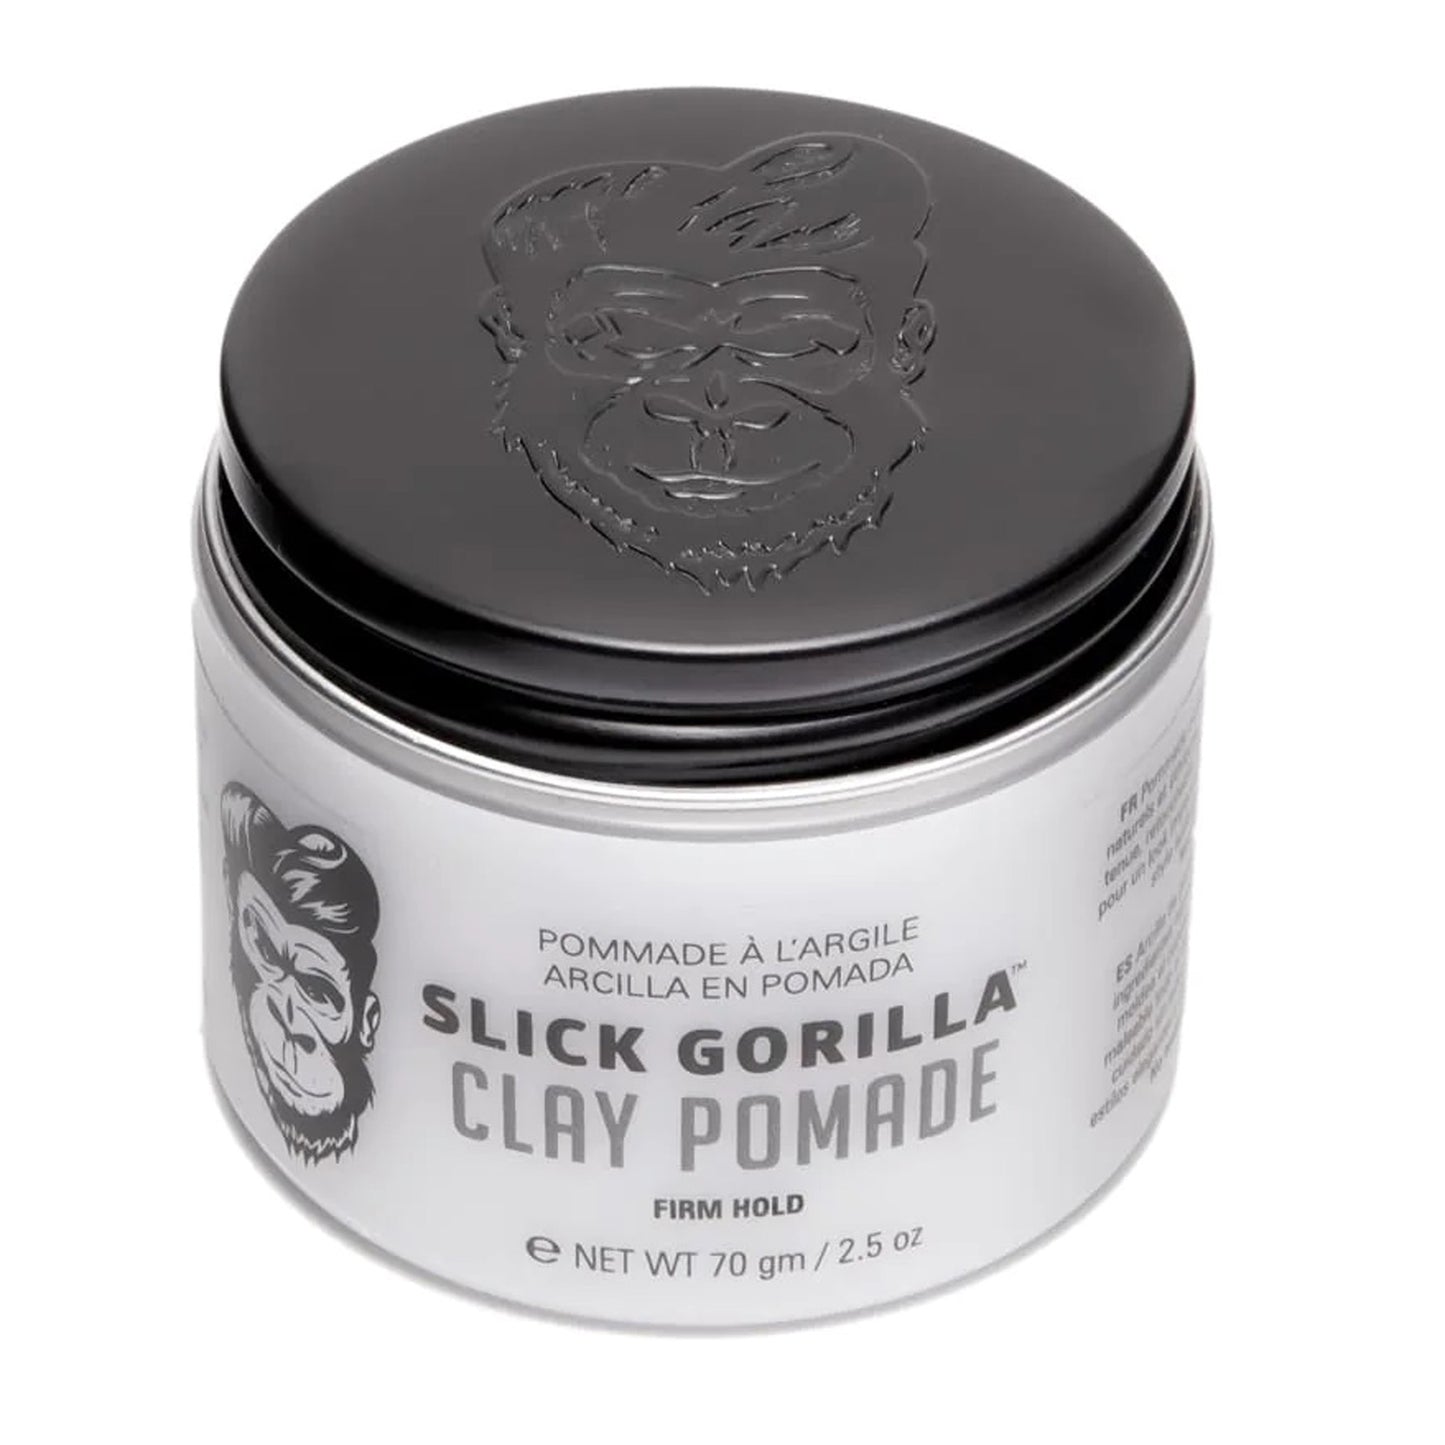 Slick Gorilla Clay Pomade top